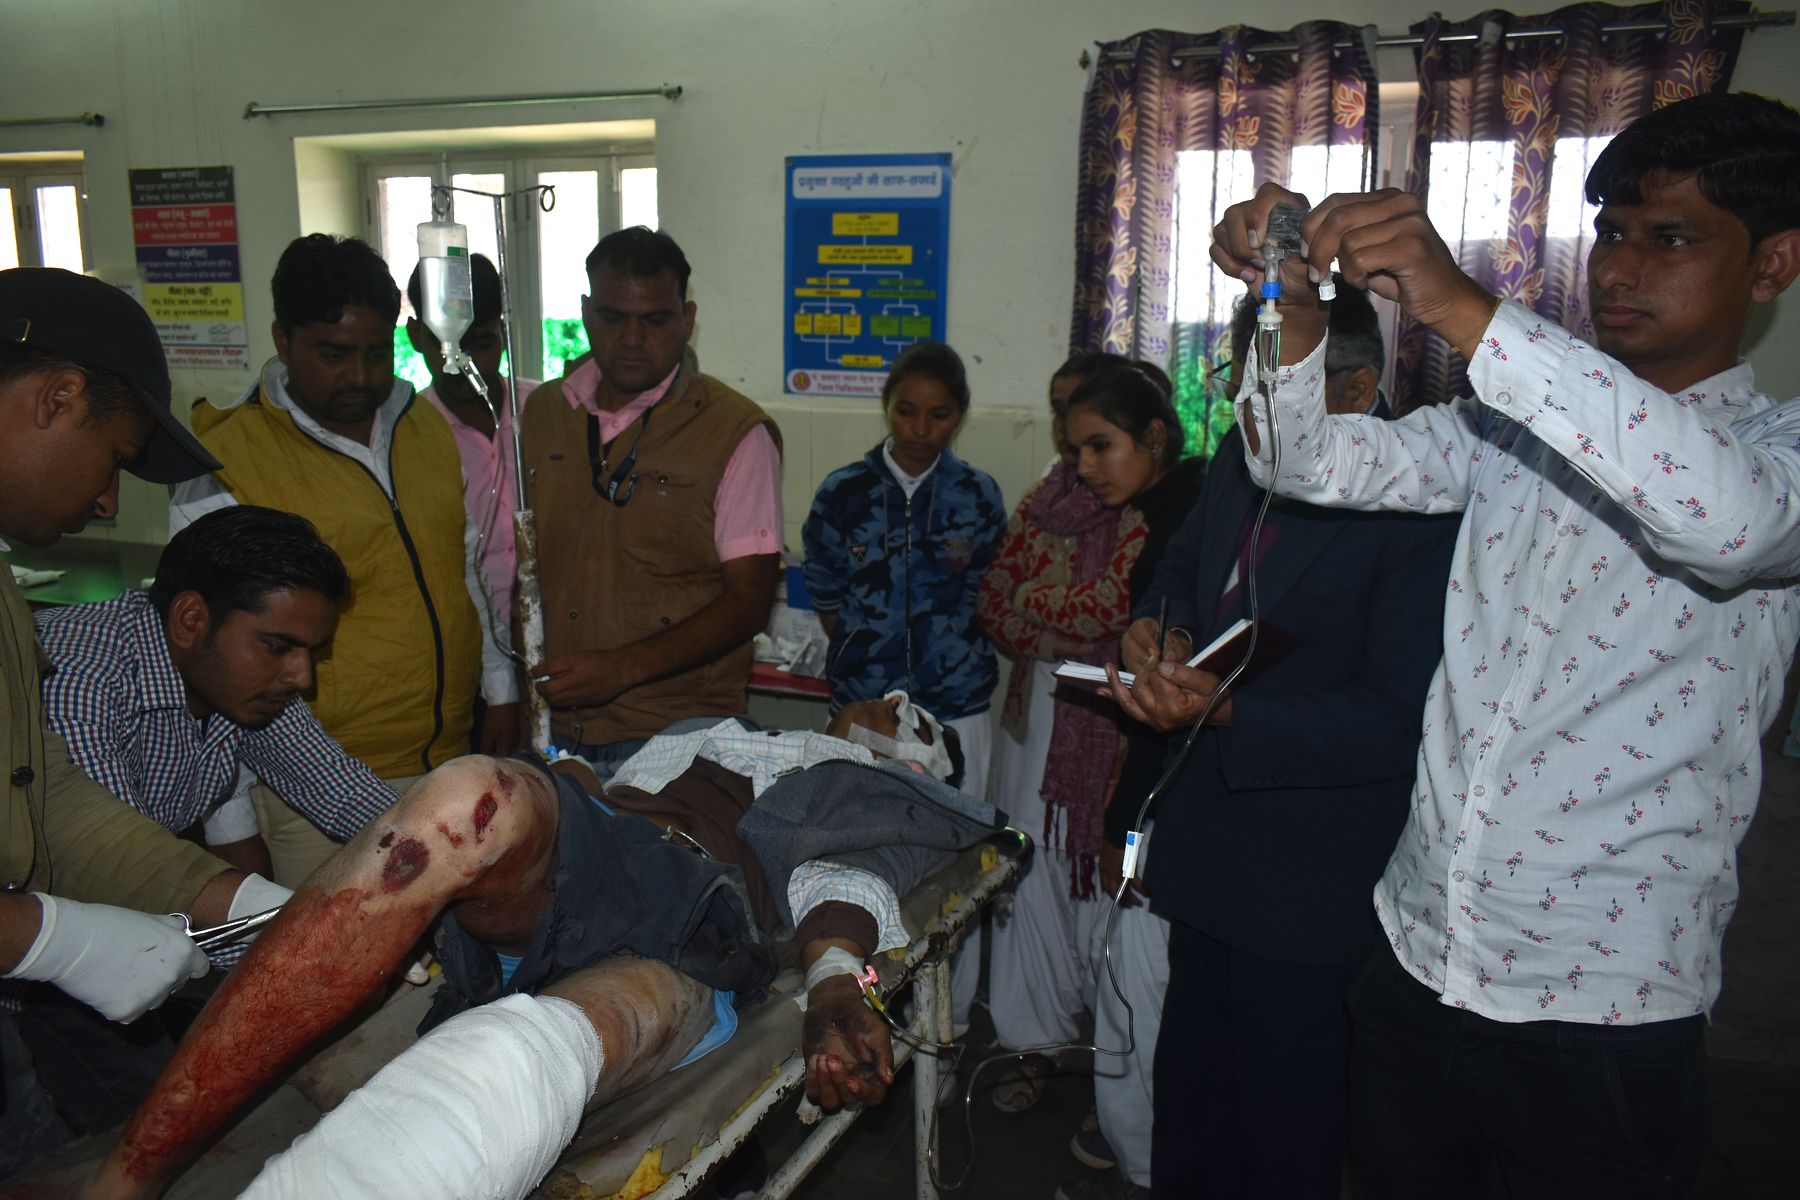 bike driver seriously injured in trailer collision, dies in Jodhpur